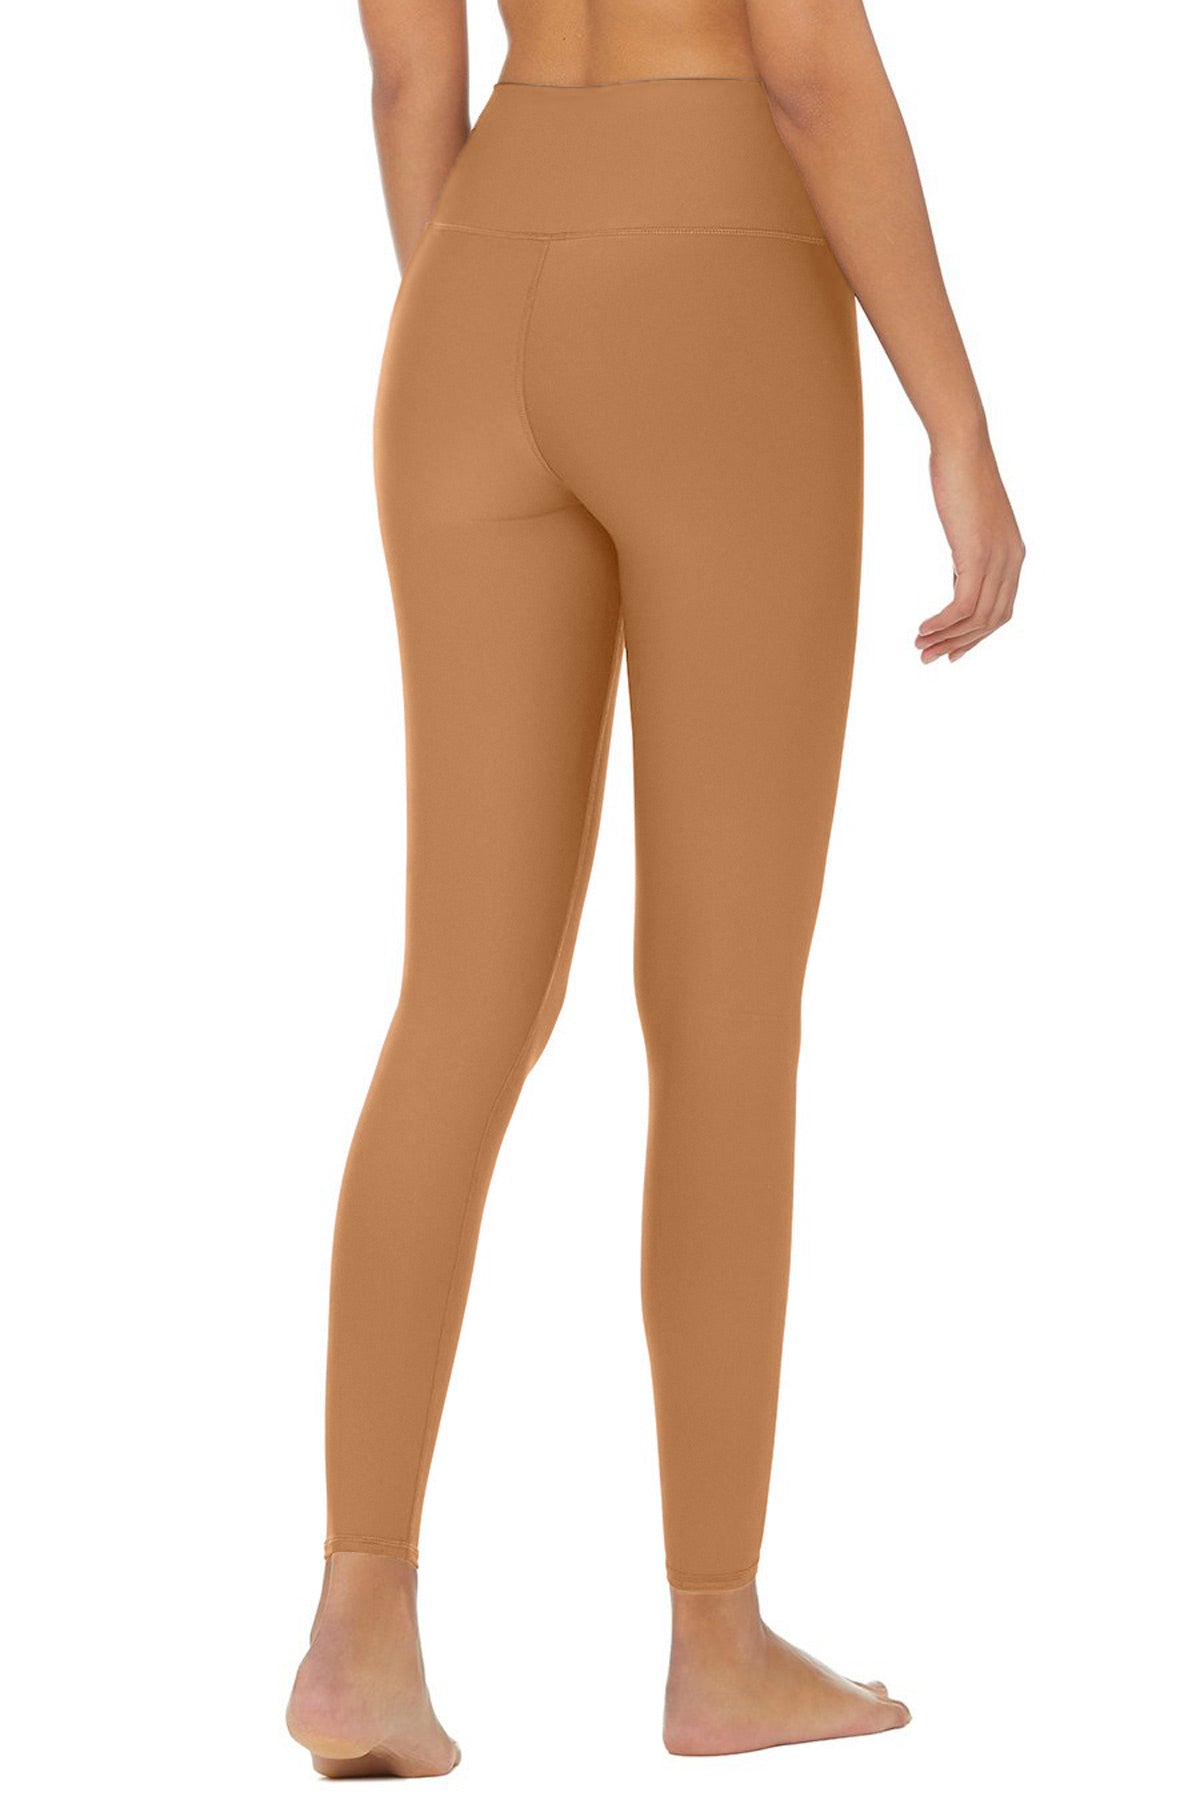 Nude UV 50+ Lucy Beige Performance Leggings Yoga Pants - Women - Pineapple Clothing